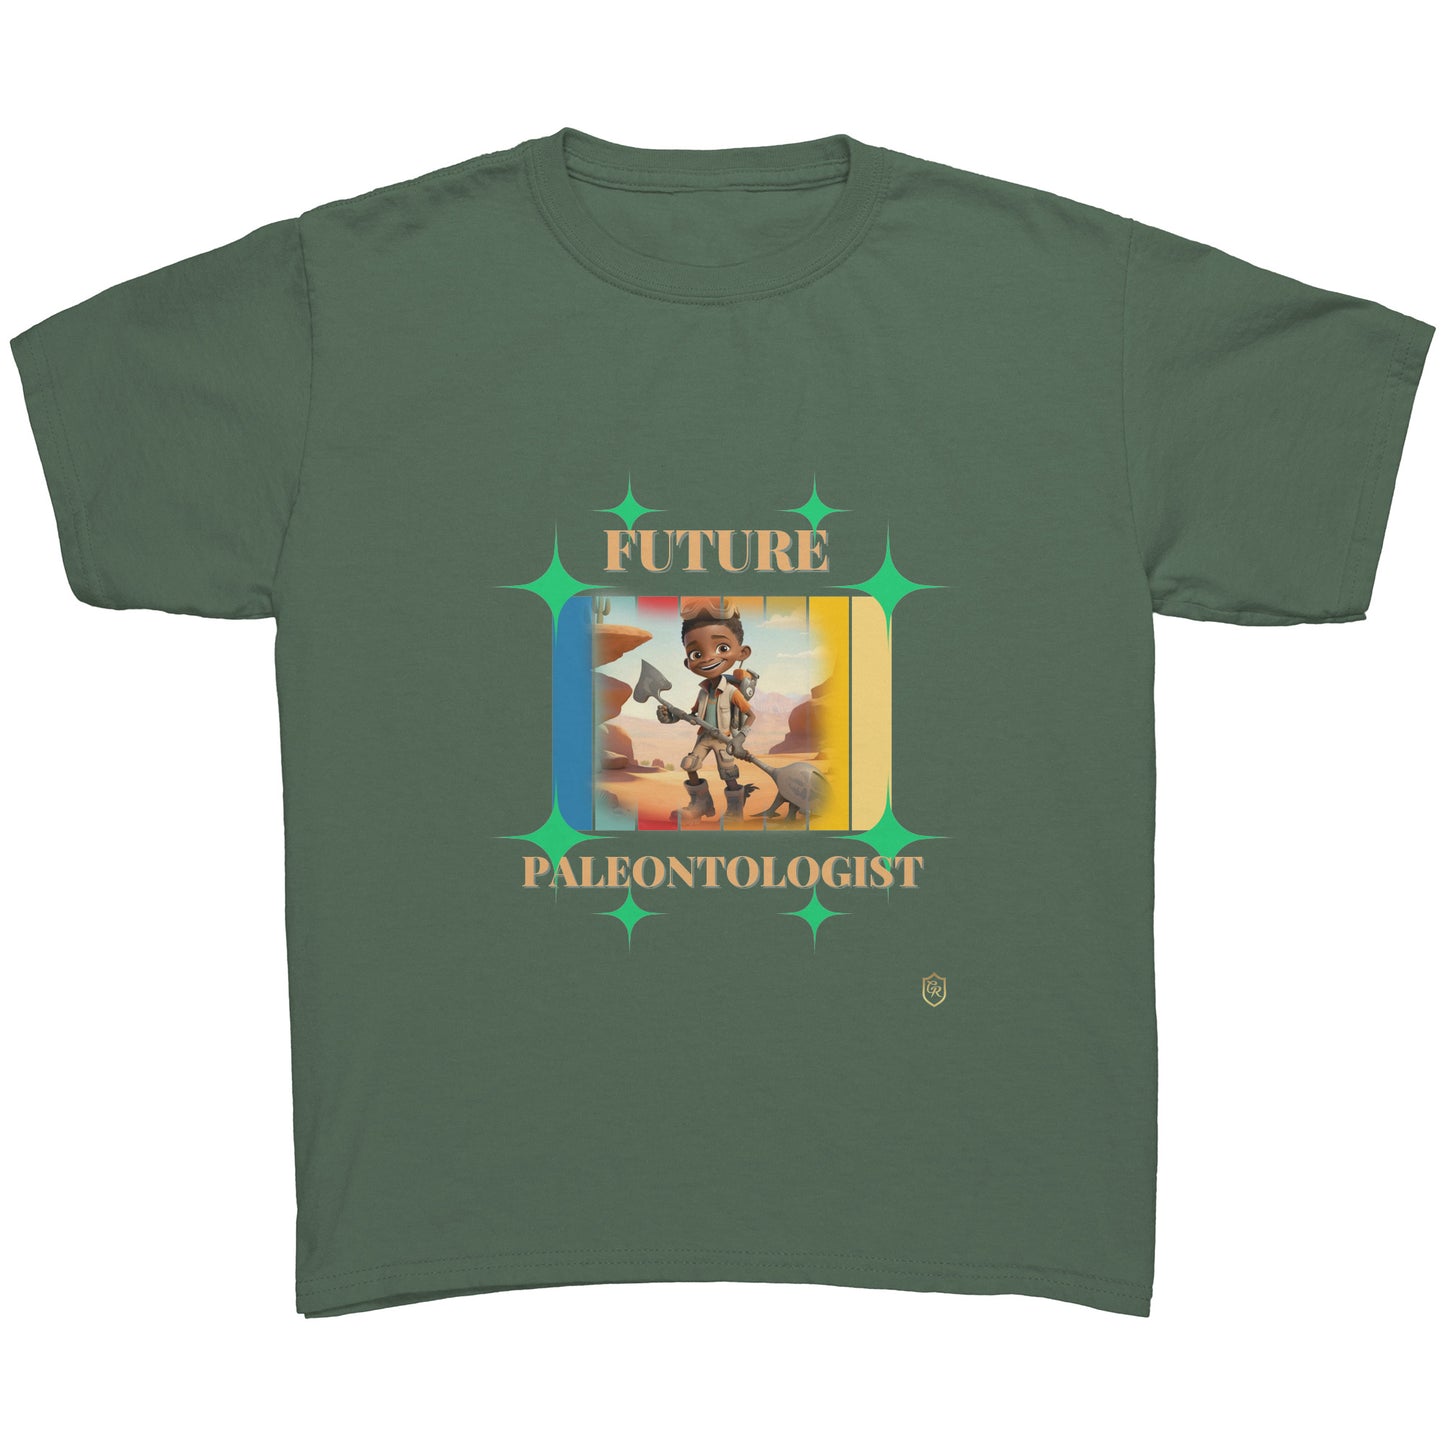 Young Boy's Future Paleontologist T-shirt